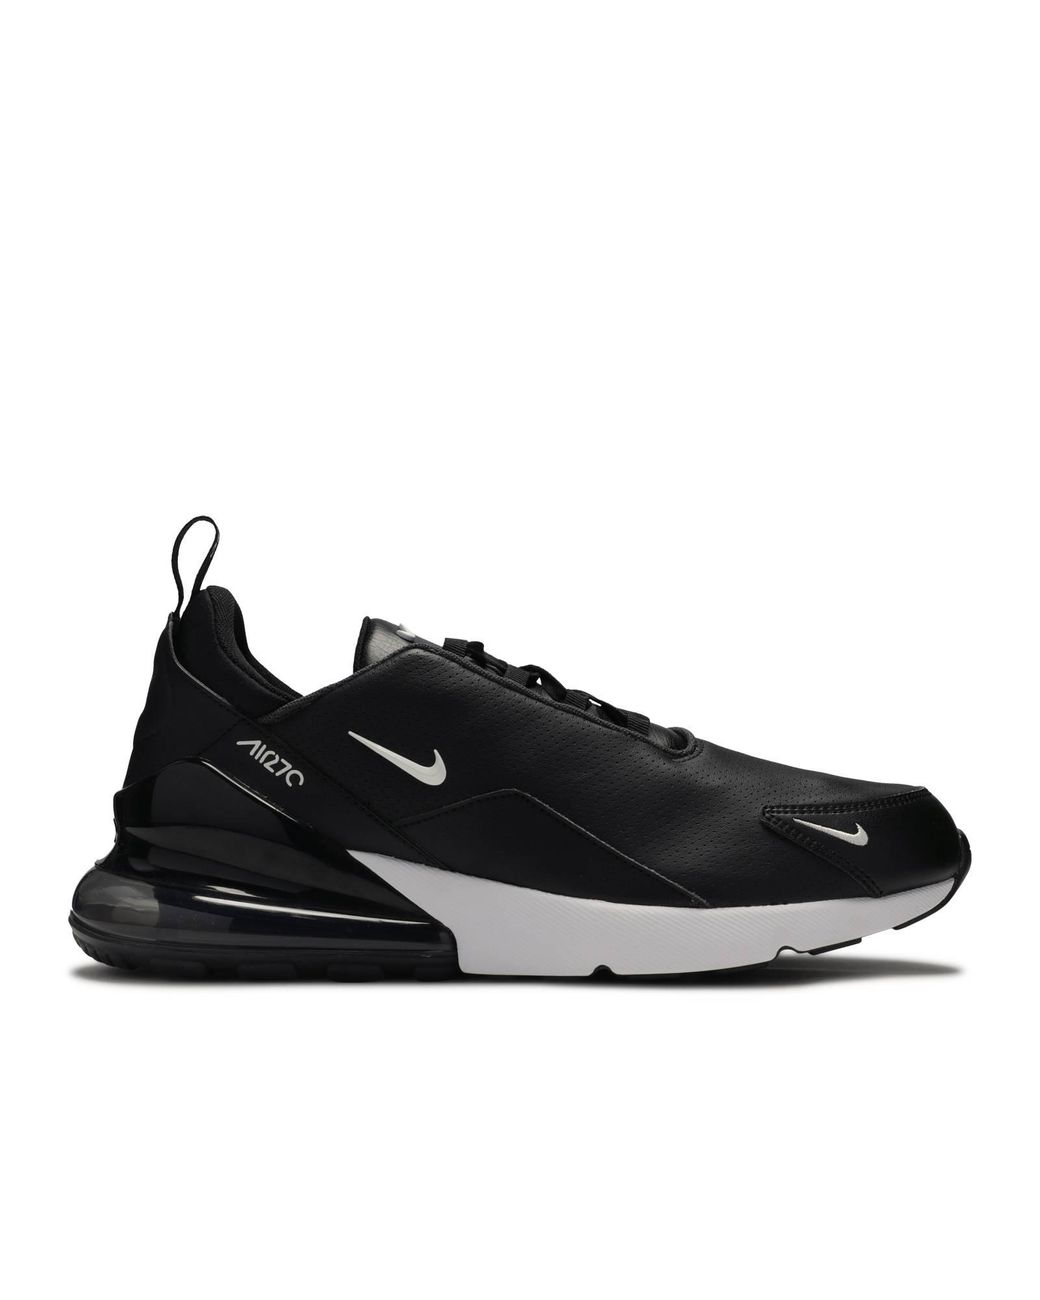 Nike Air Max 270 Premium Leather Sneaker in Black for Men - Save 49% - Lyst